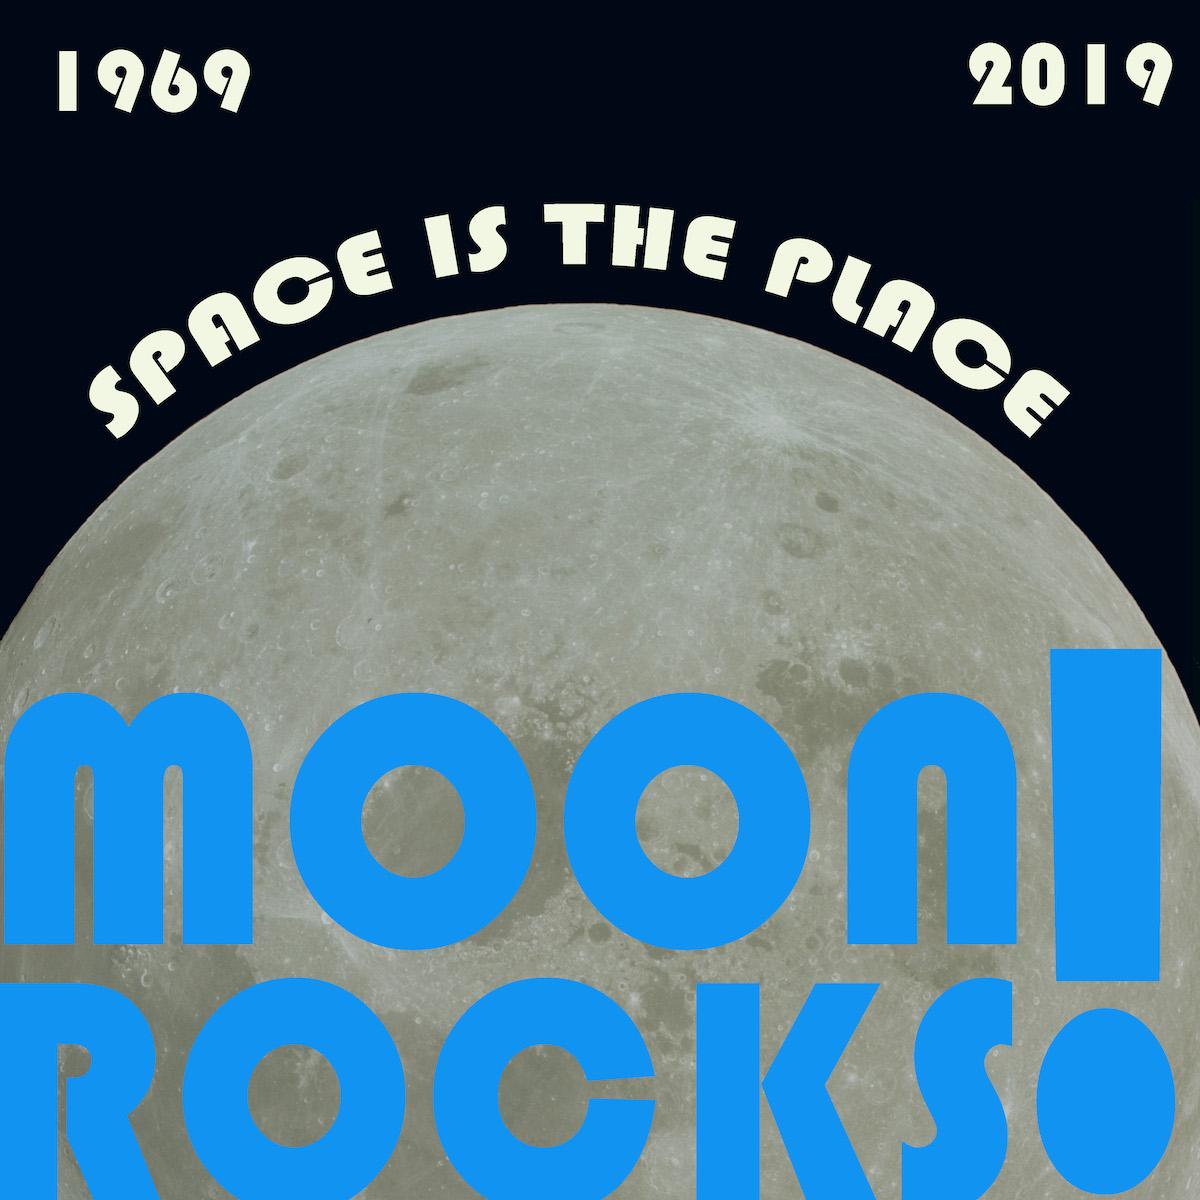 Moon Rocks! Exhibit